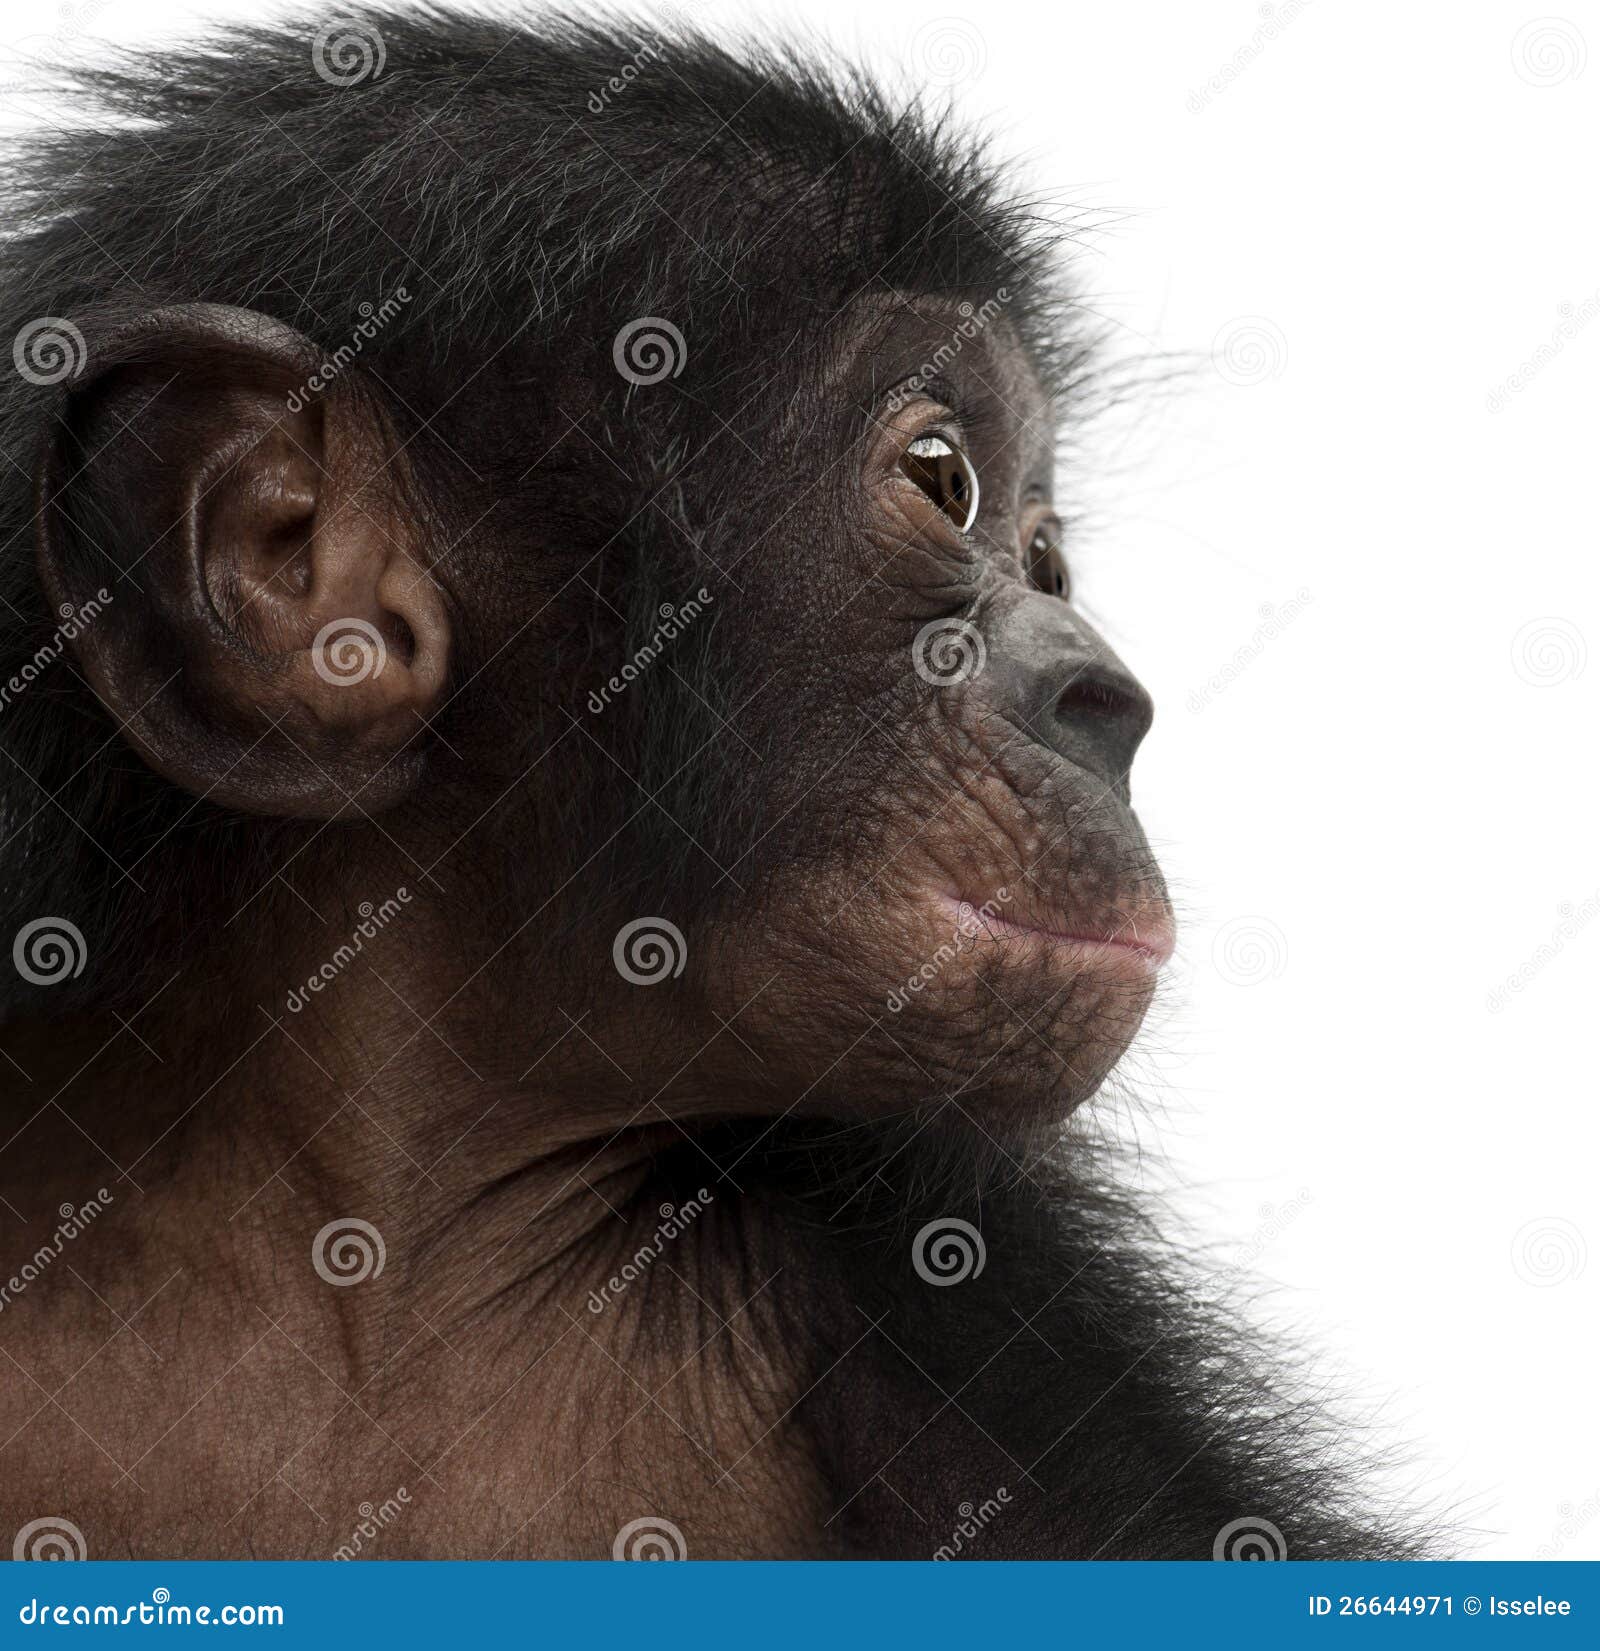 baby bonobo, pan paniscus, 4 months old